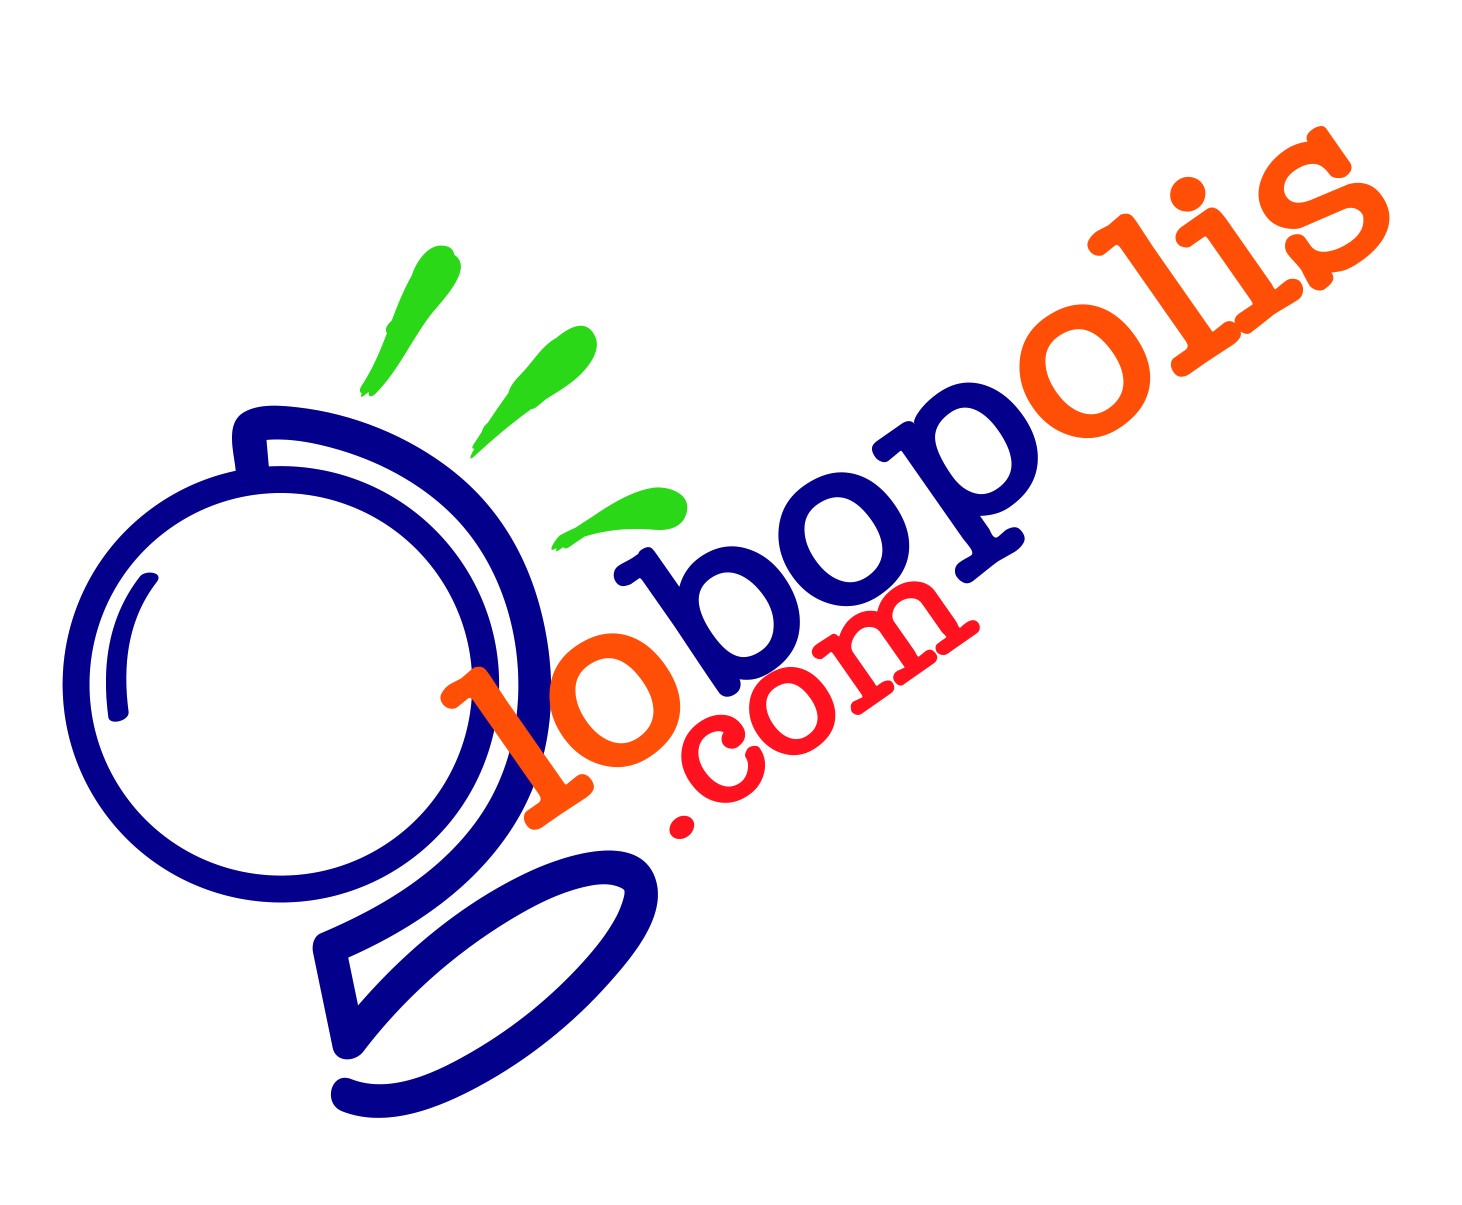 Globopolis